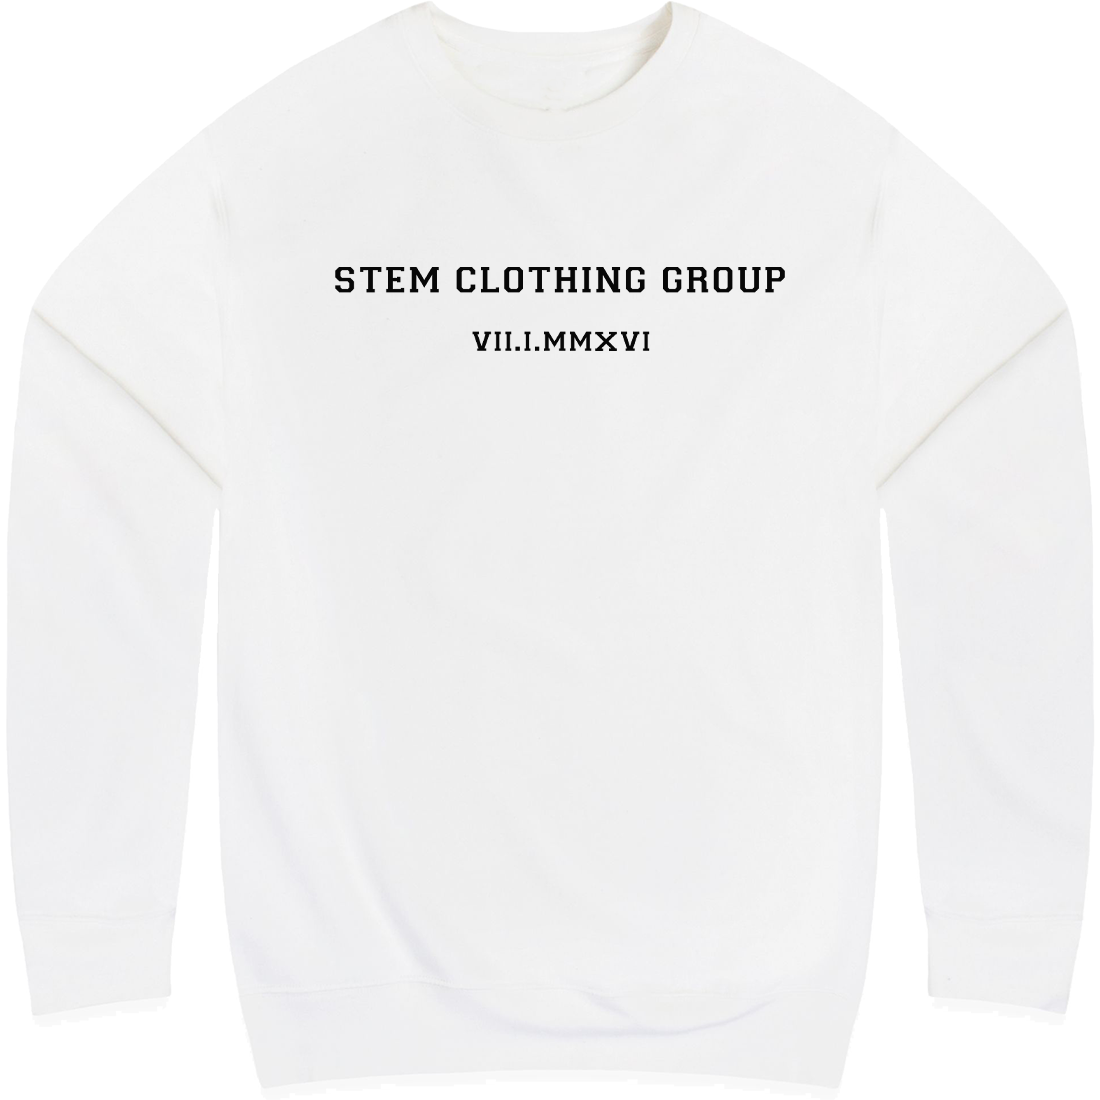 STEM "Roman Numerals" Unisex Sweatshirt